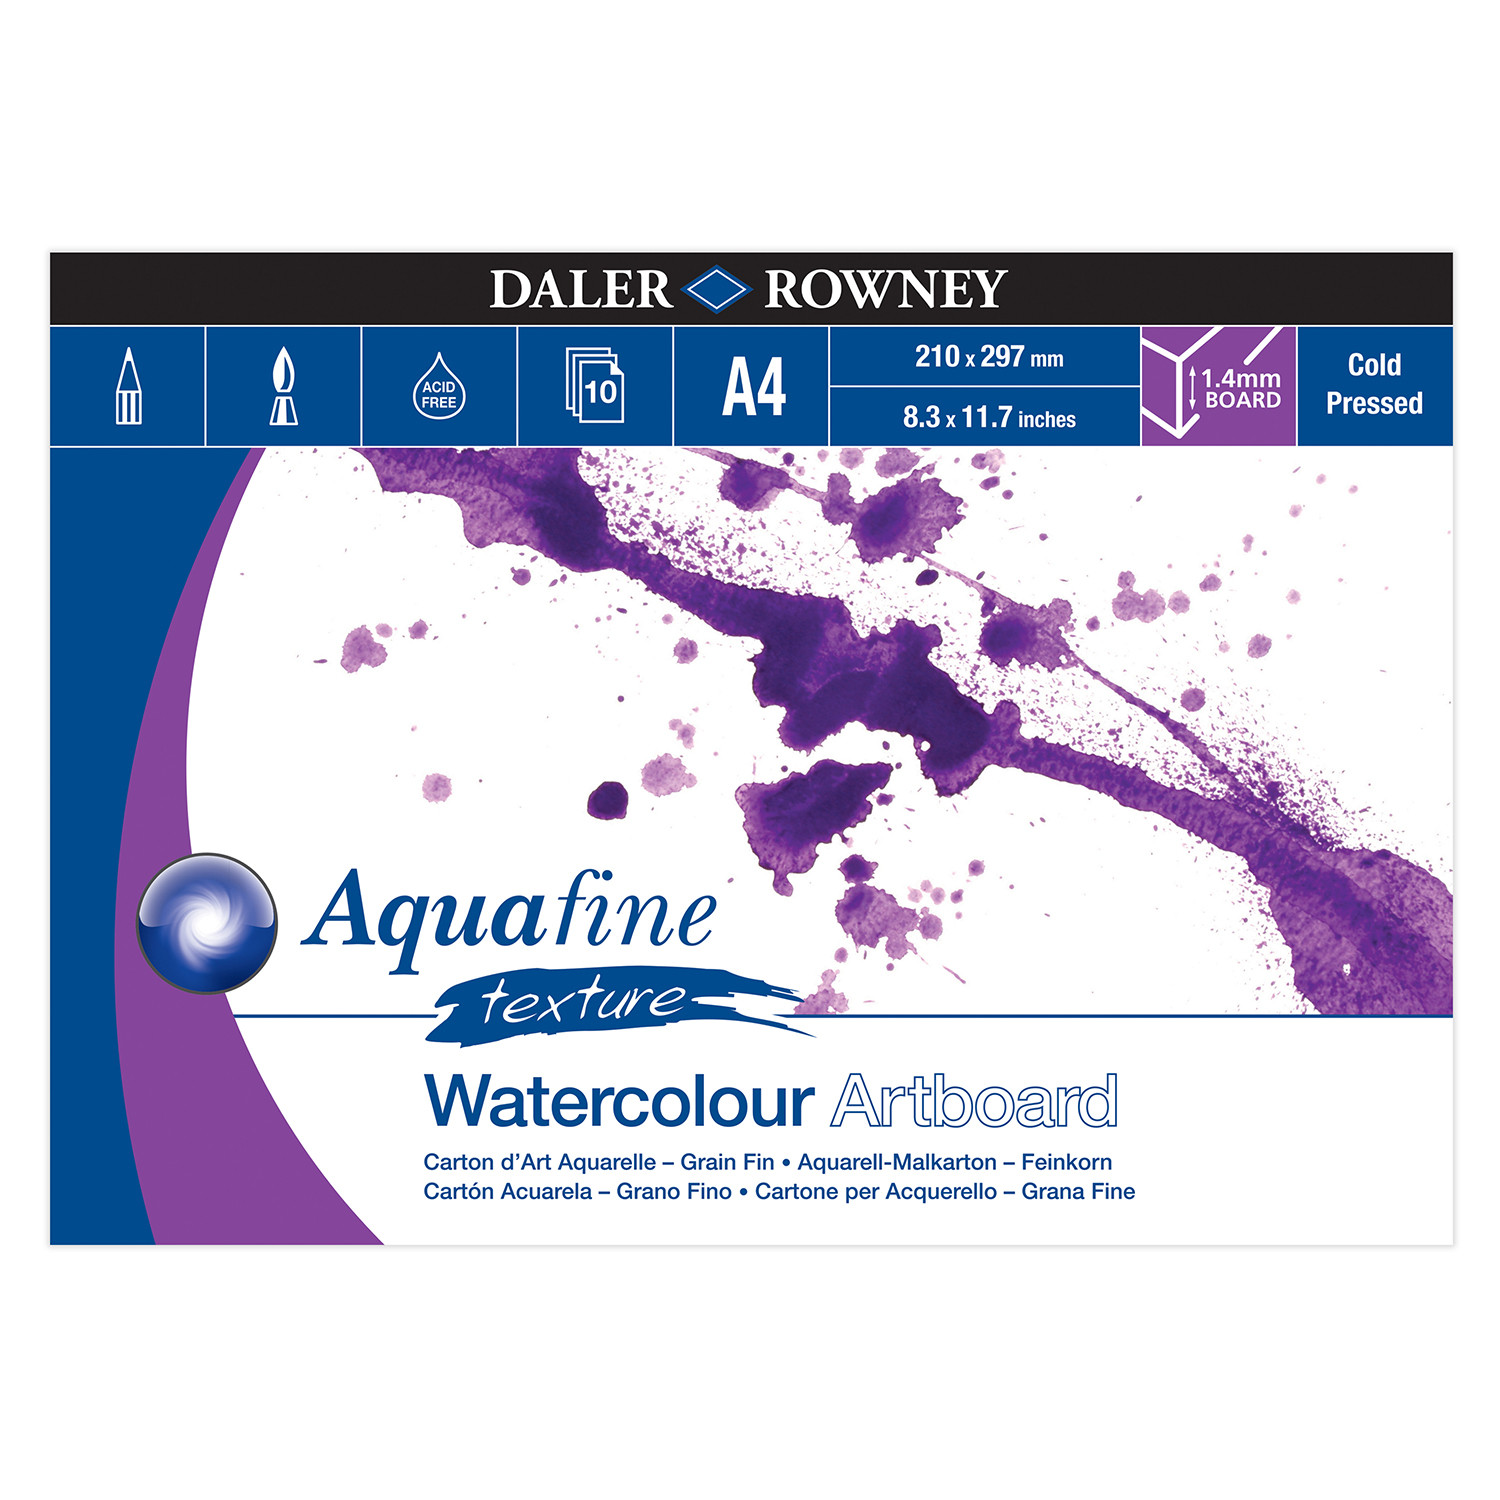 Daler-Rowney Aquafine Watercolour Artboard Image 1